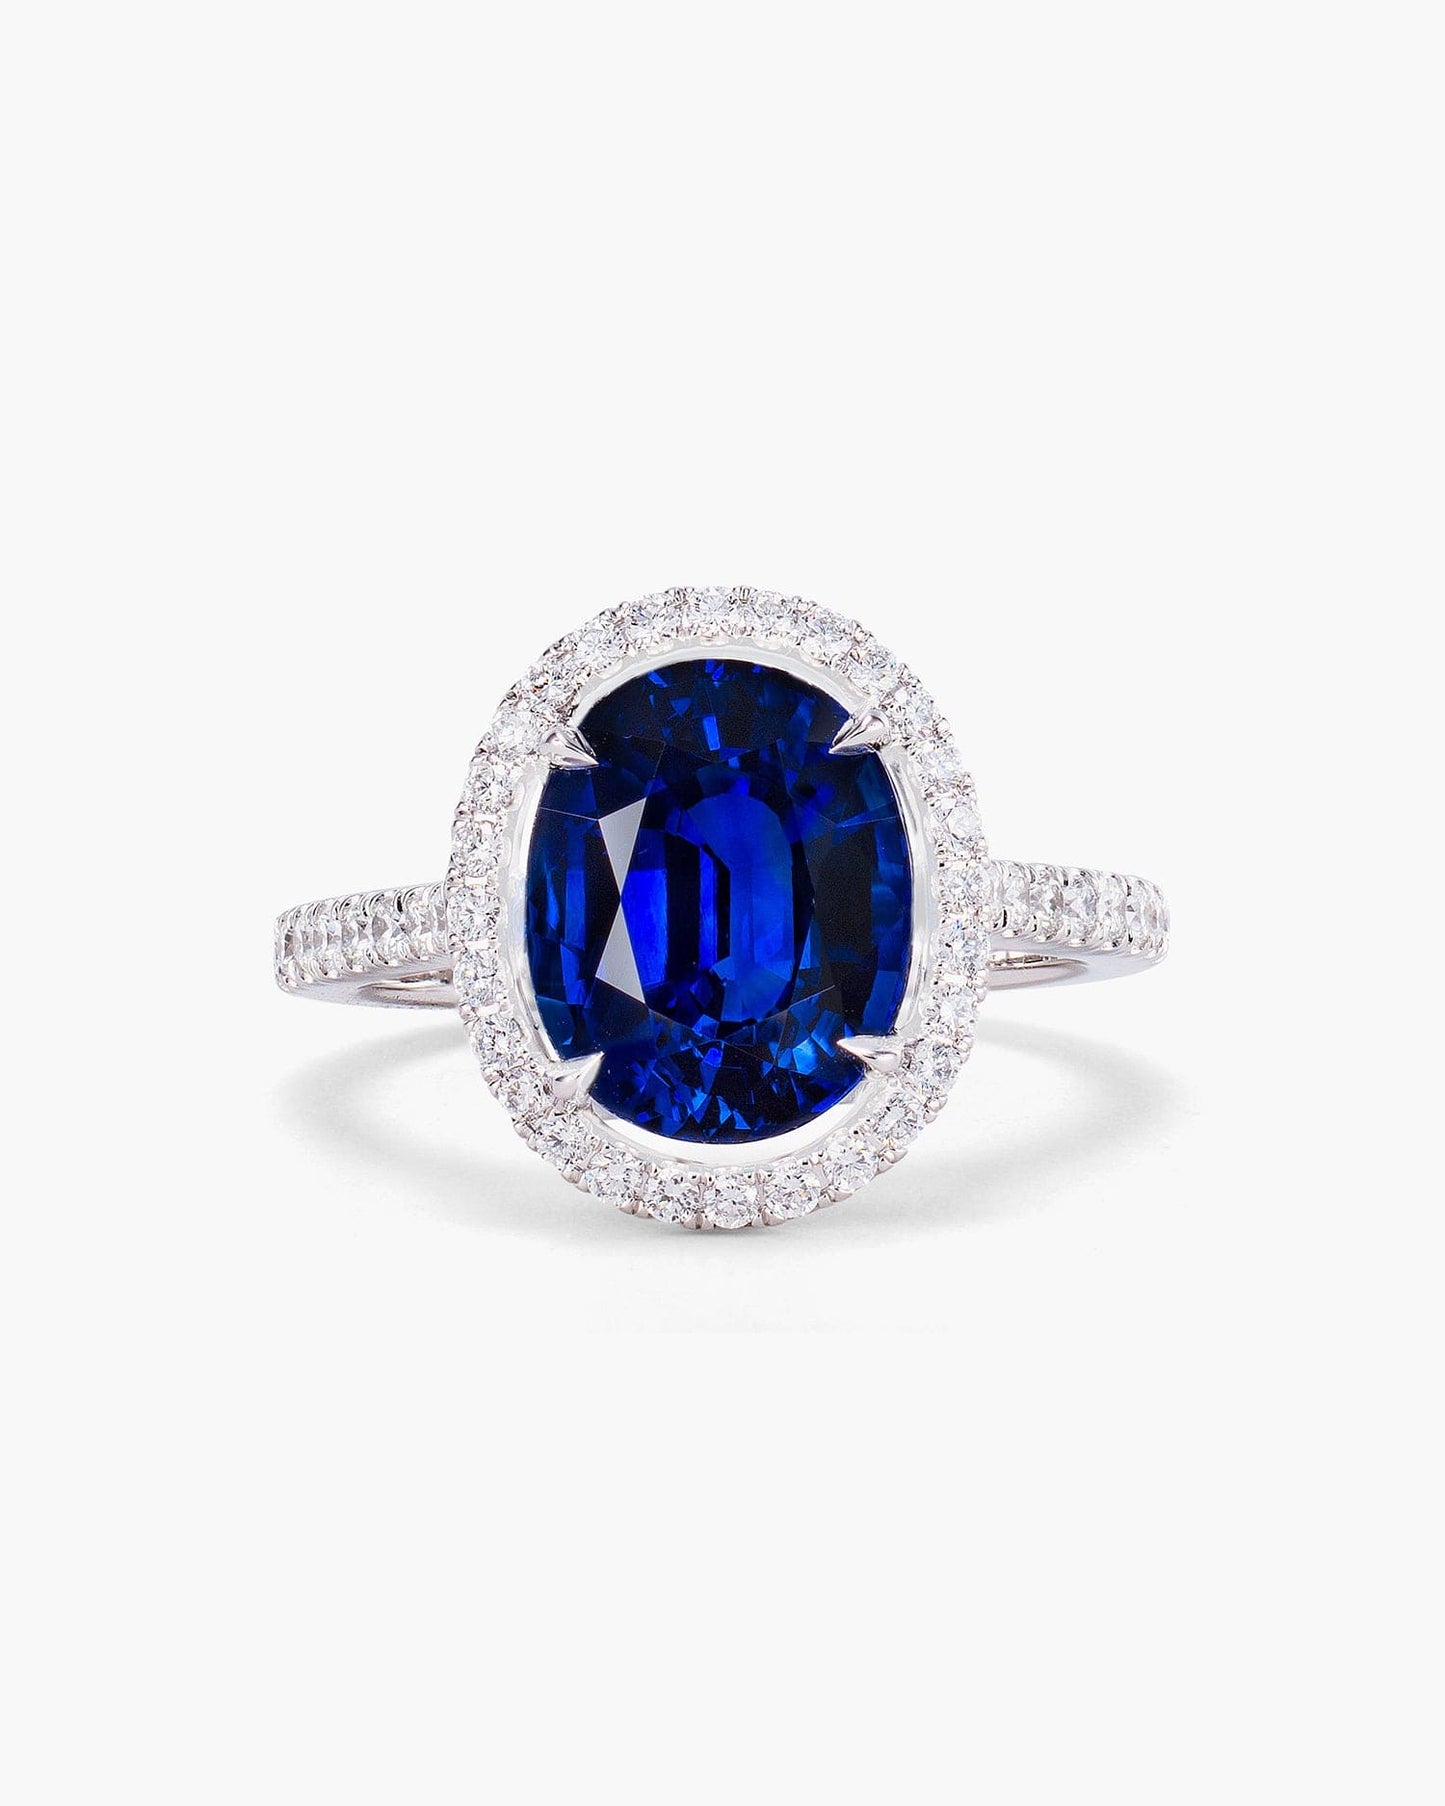 4.35 carat Oval Shape Ceylon Sapphire and Diamond Ring